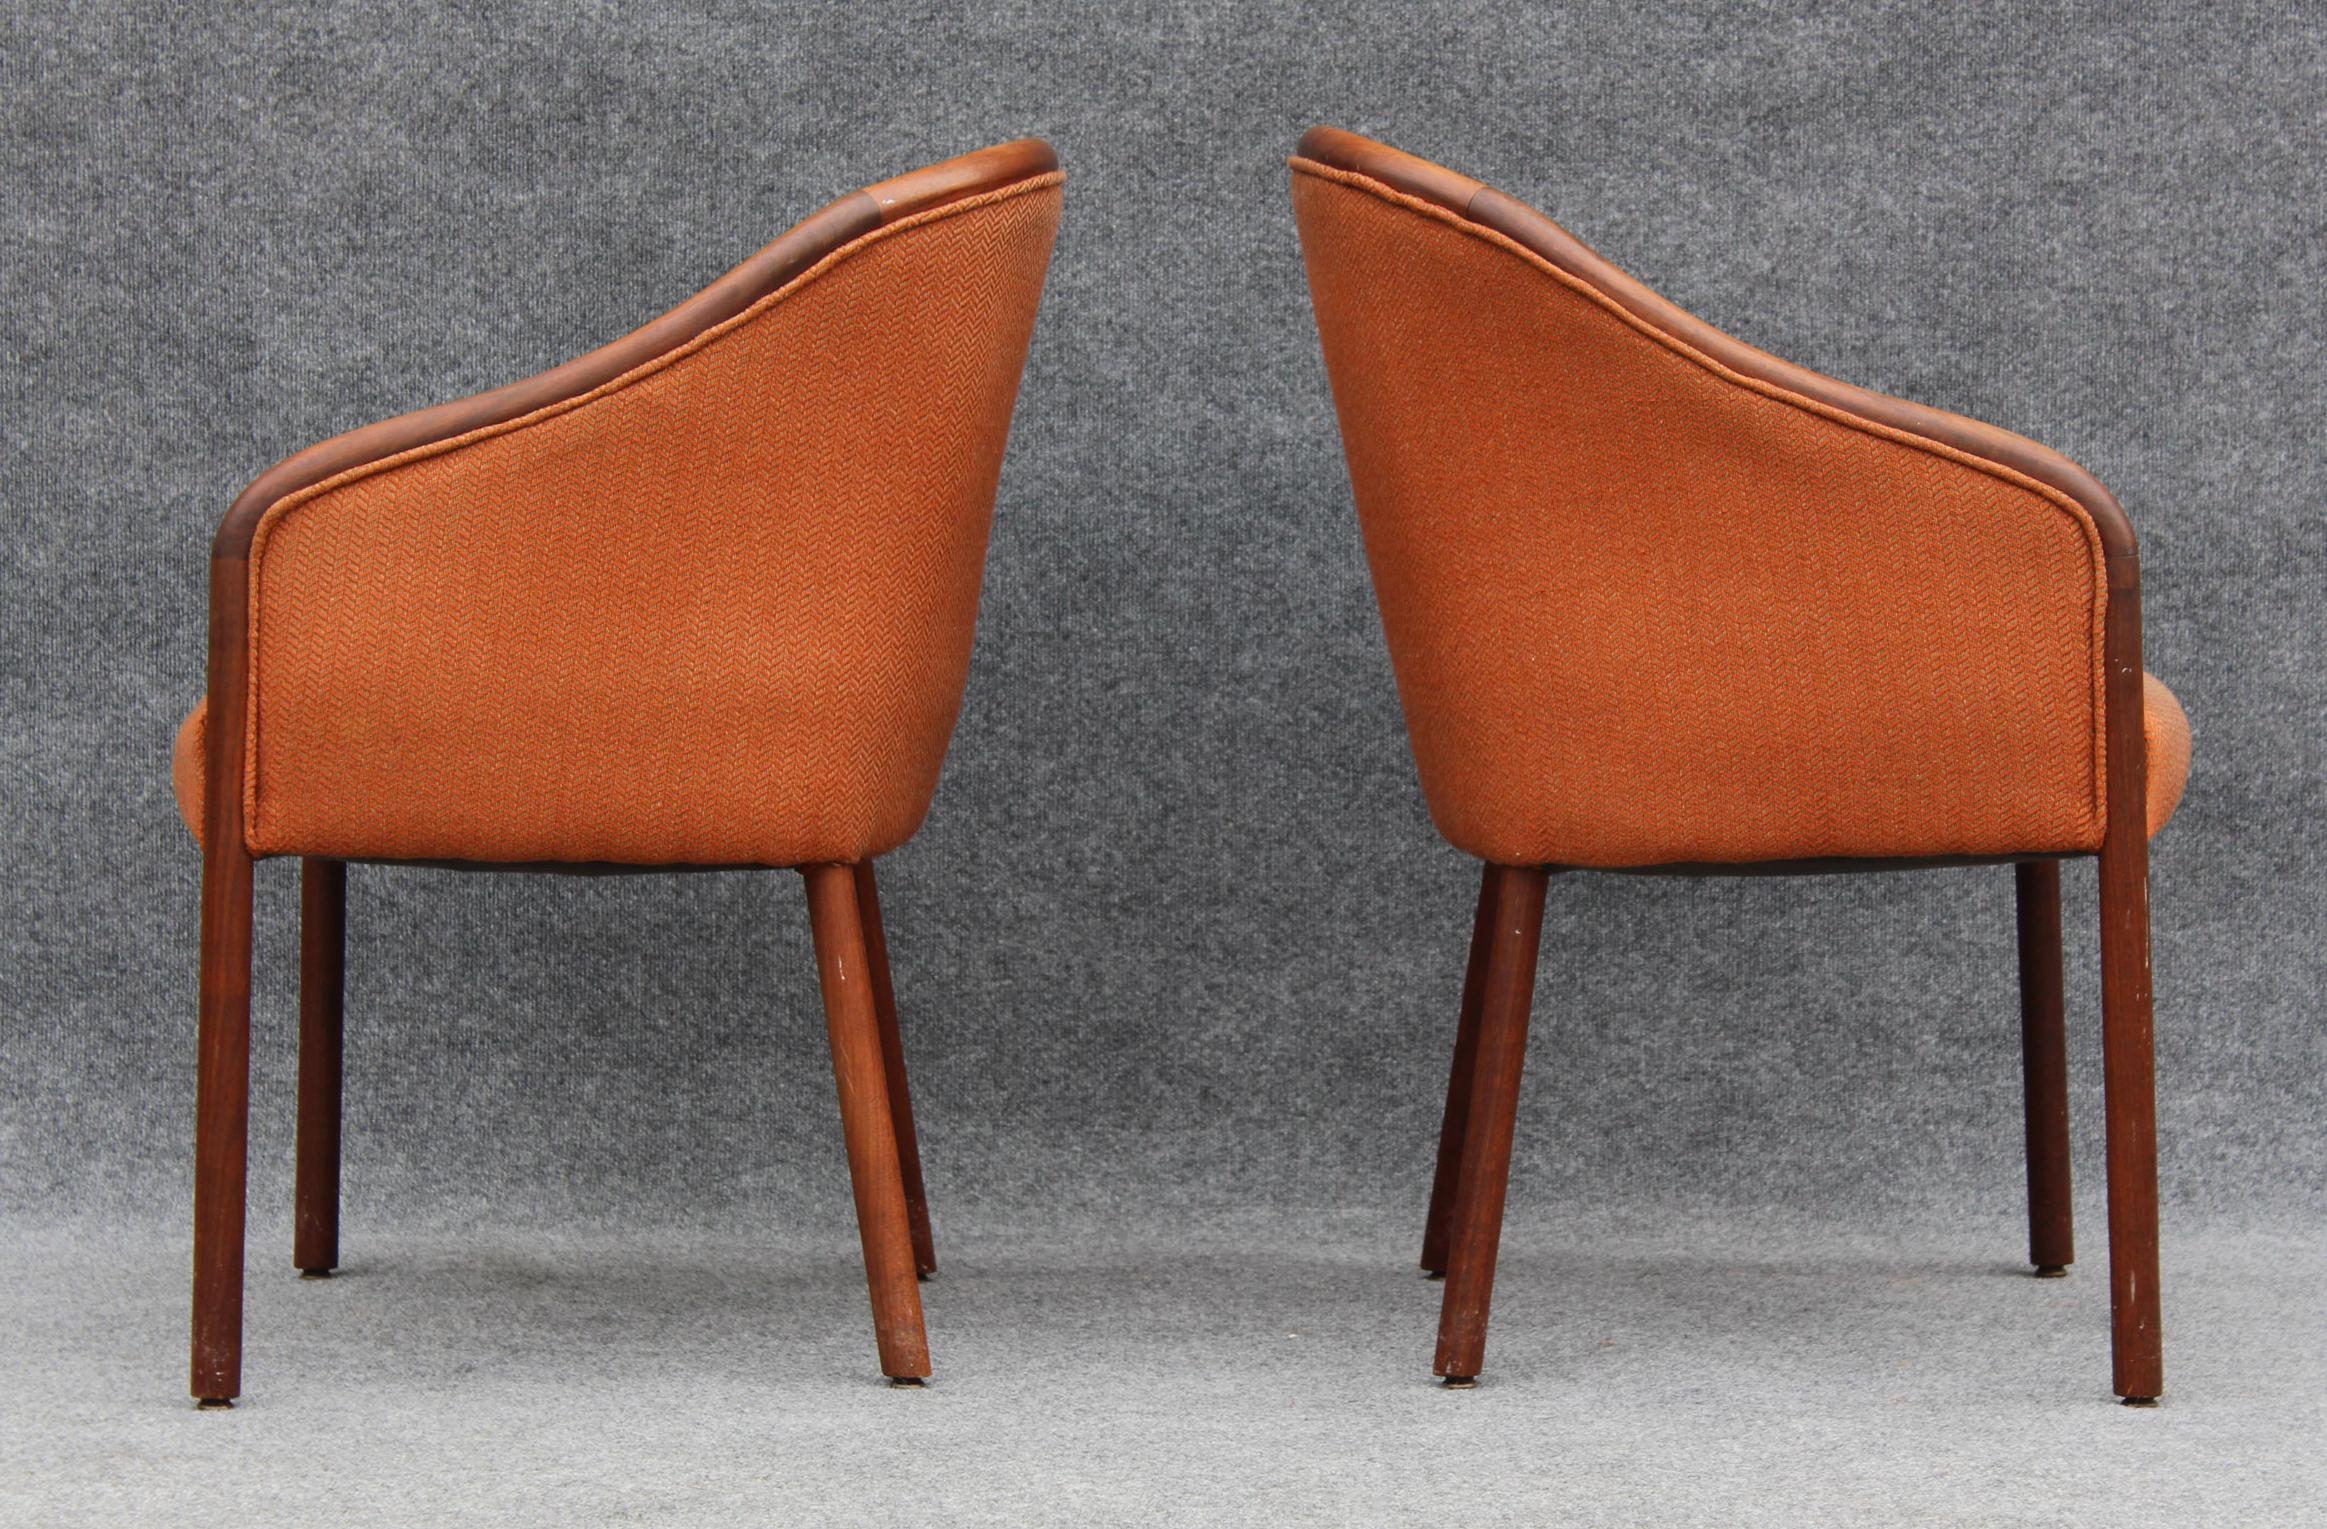 Pair of Mid-Century Modern Walnut Armchair Side Chairs After Ward Bennett 2